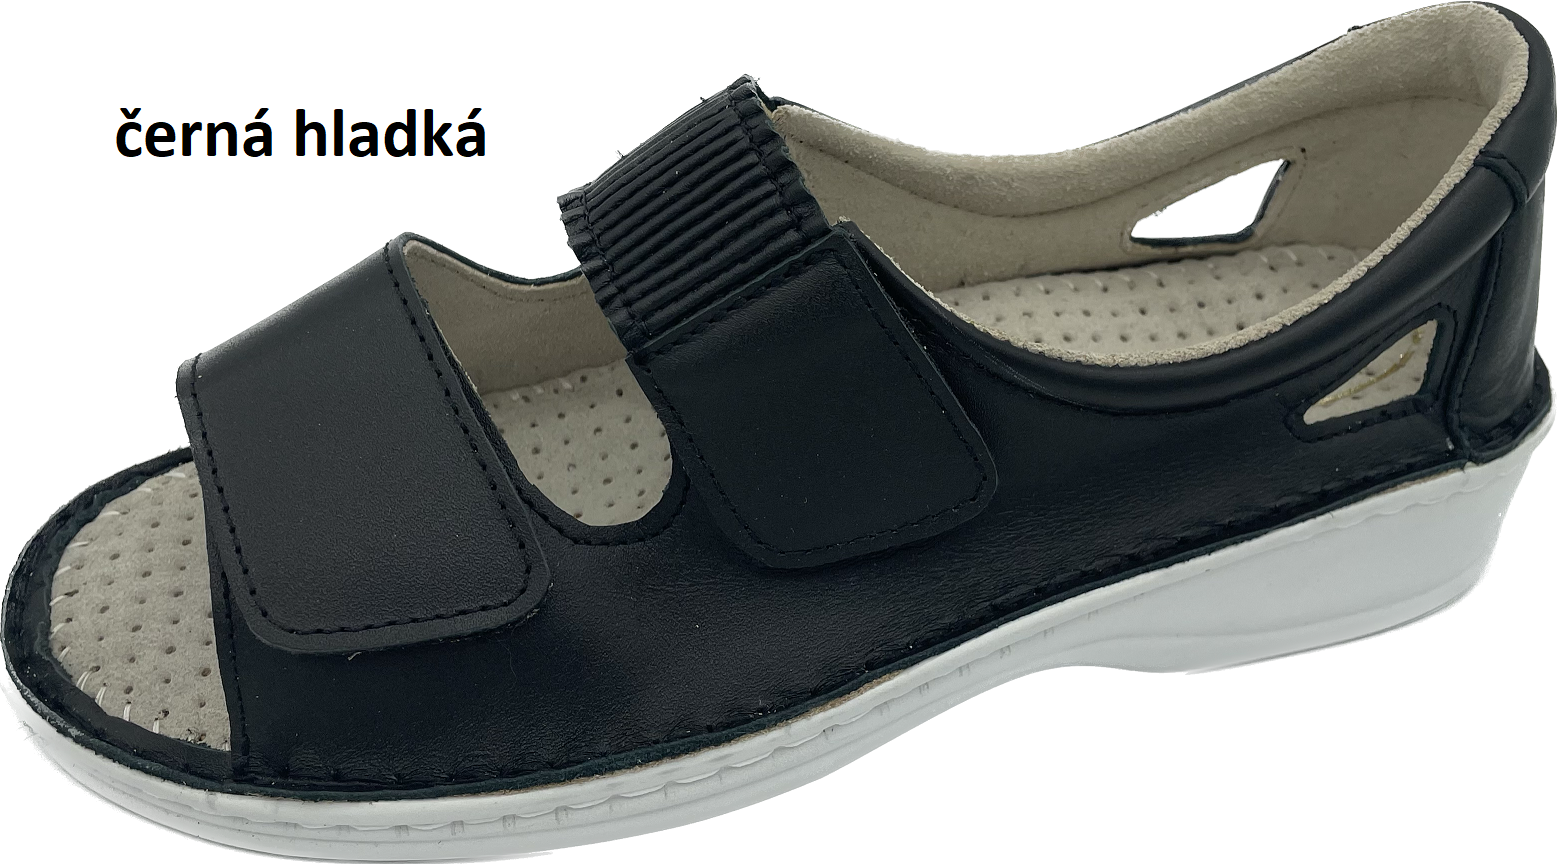 Boty Hanák vzor 306 - bílá podešev Barva usně: černá hladká, Velikosti obuvi: 36